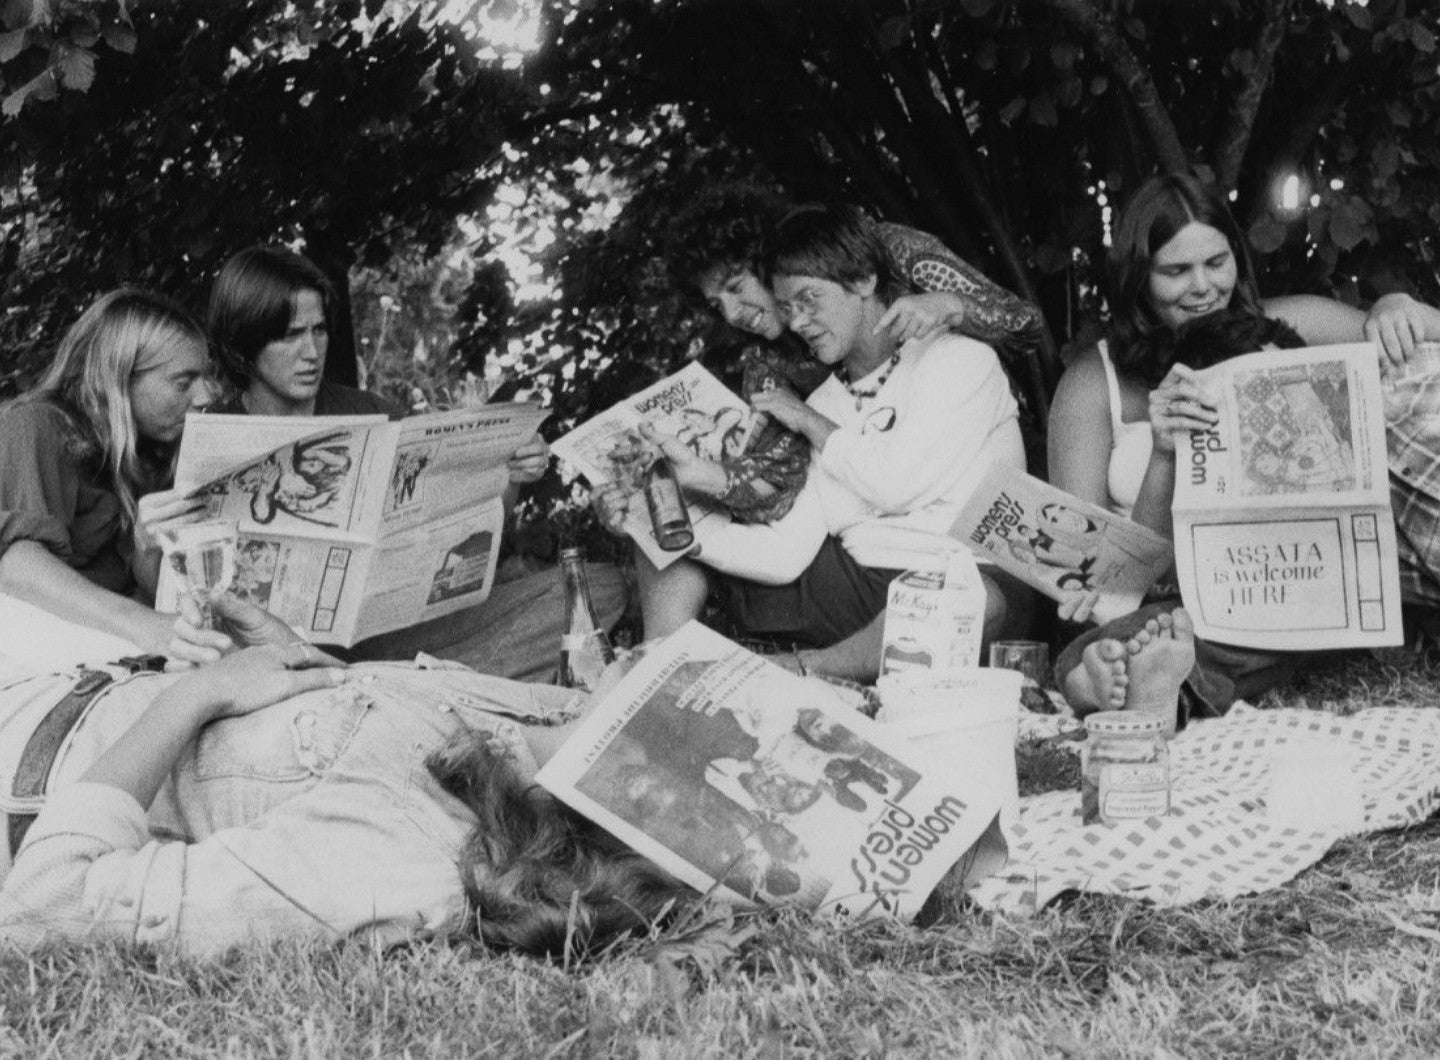 women lying together on grass reading Women's Press newspaper